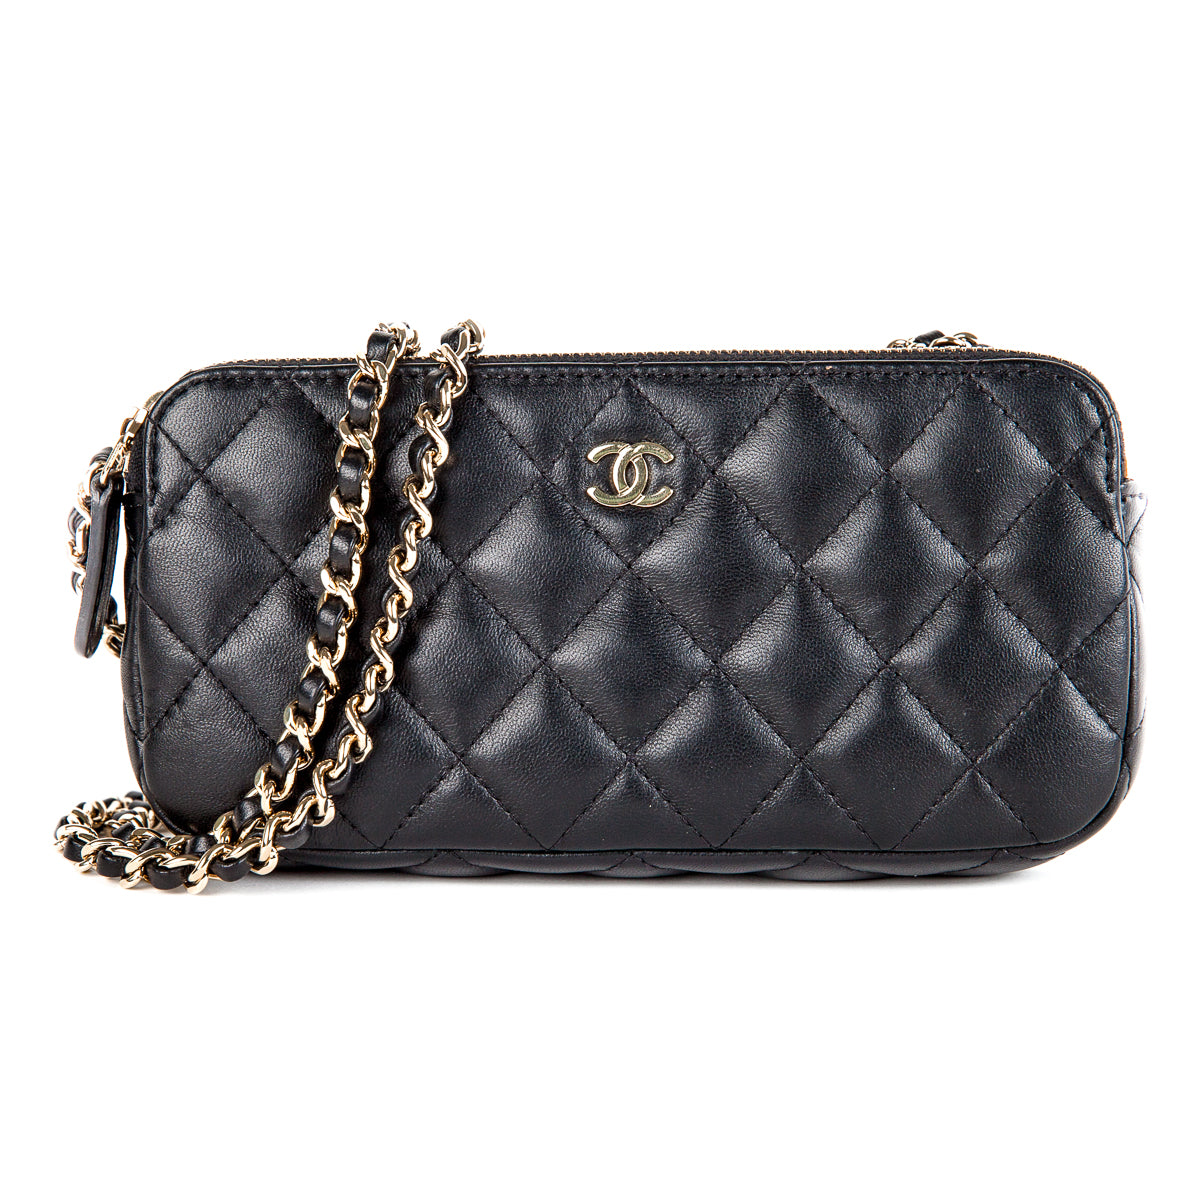 pearl chanel handbag authentic